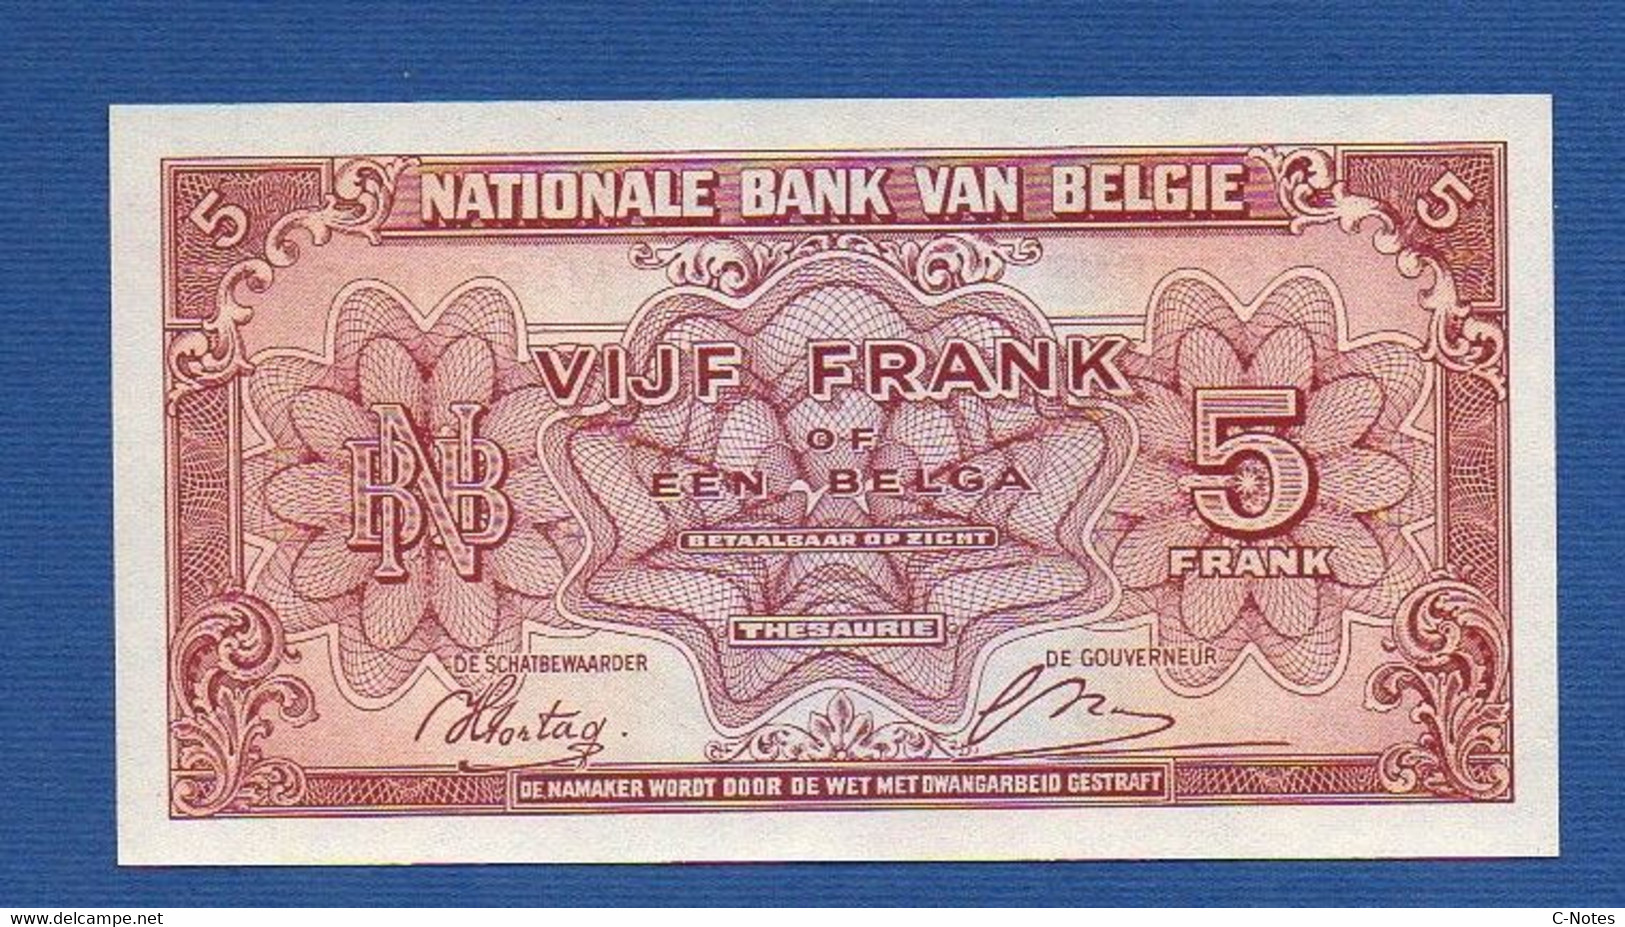 BELGIUM - P.121 - 5 Francs 1943 UNC, Serie M1 624625 - 5 Francos